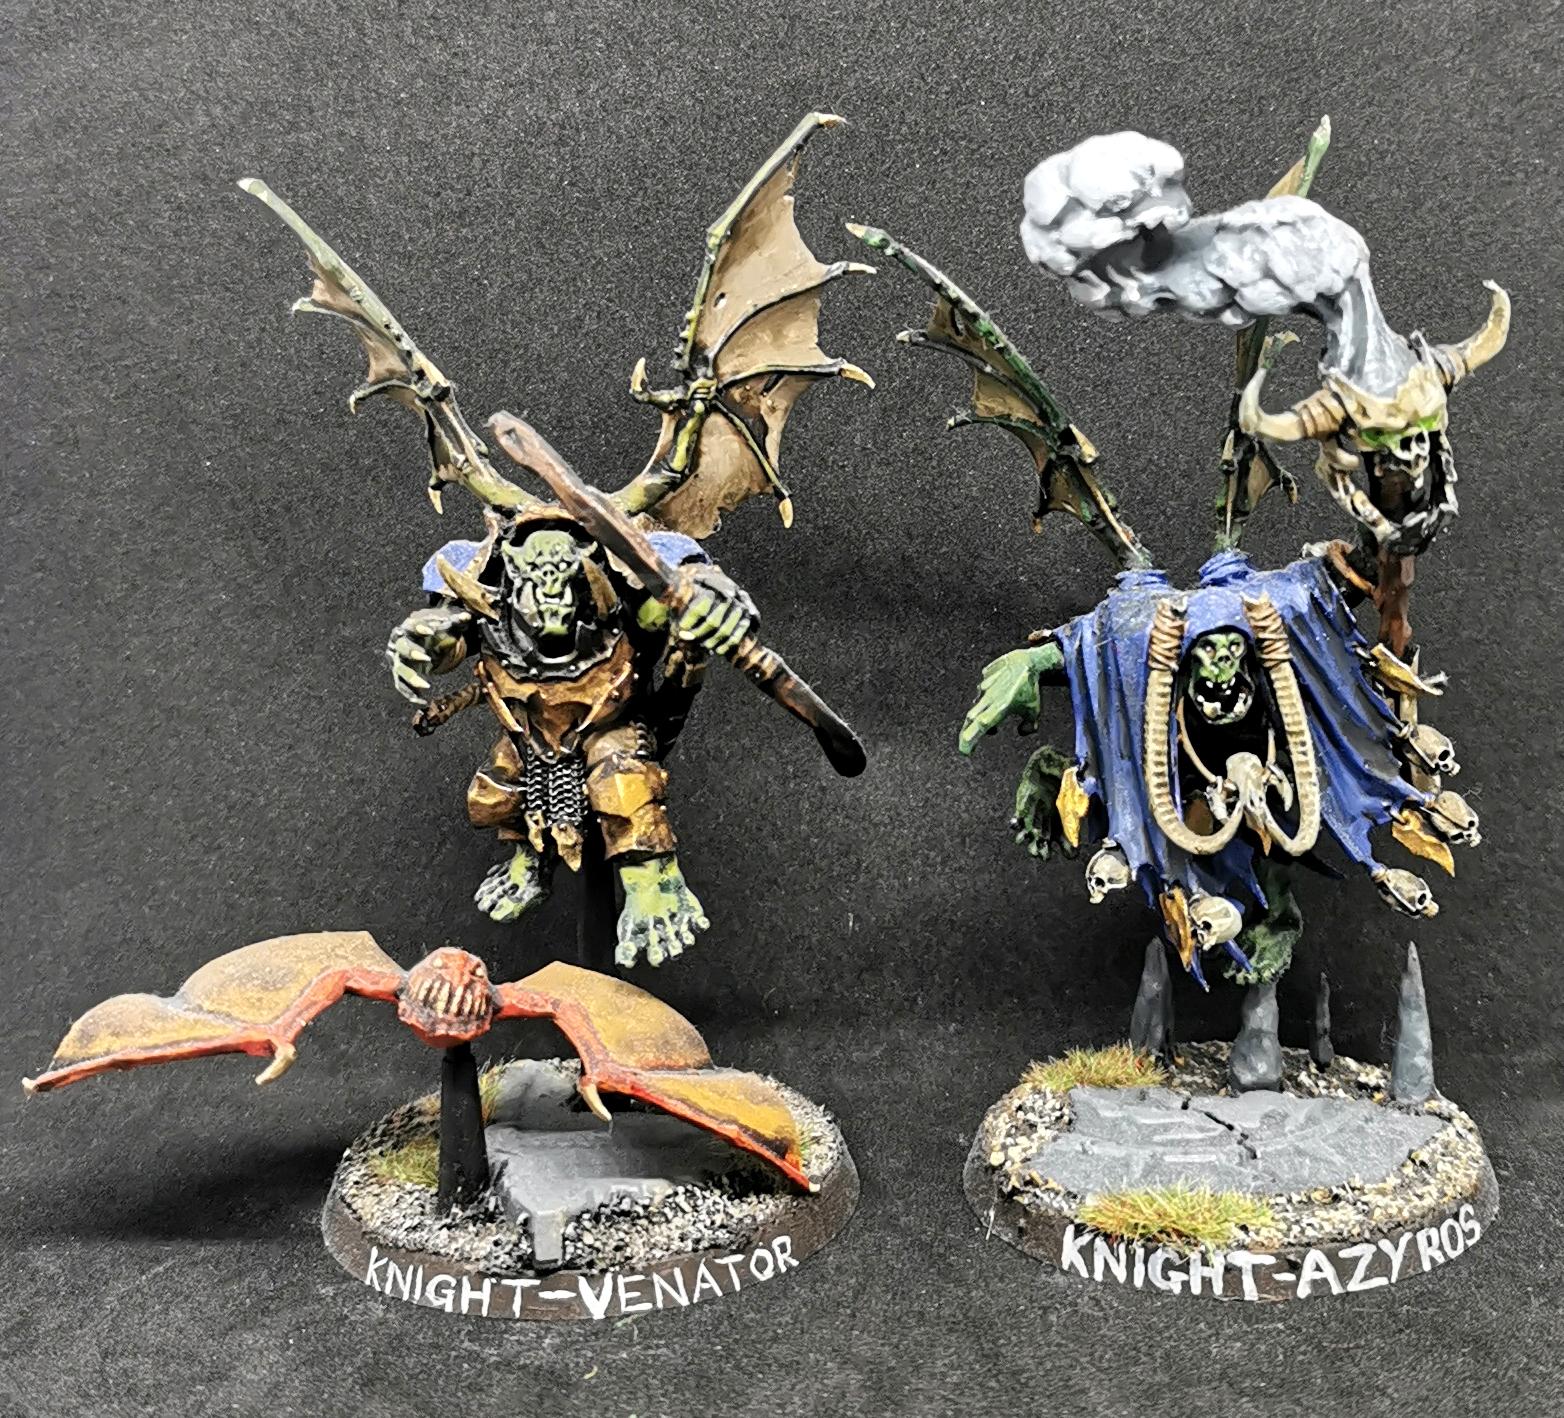 Knight Venator and Knight Azyros